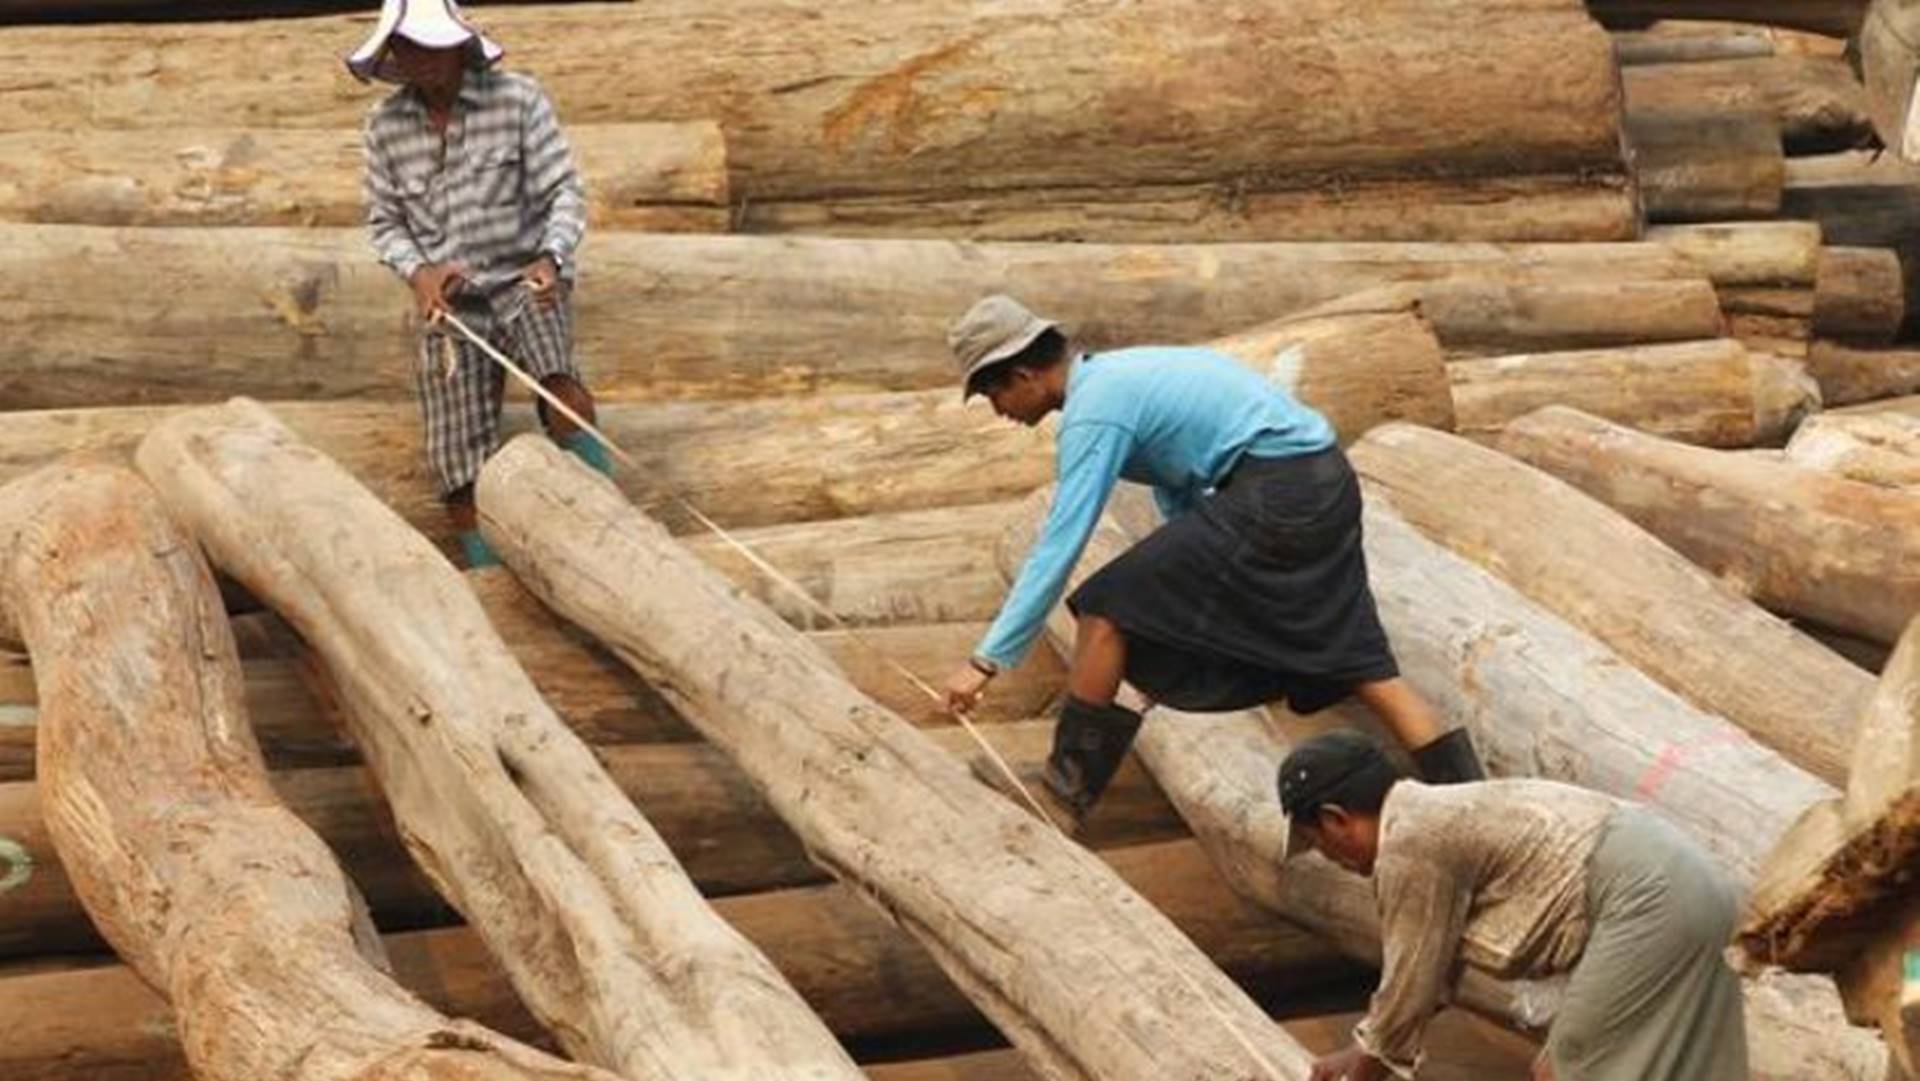 Myanmar’s Dirty Timber getting into EU